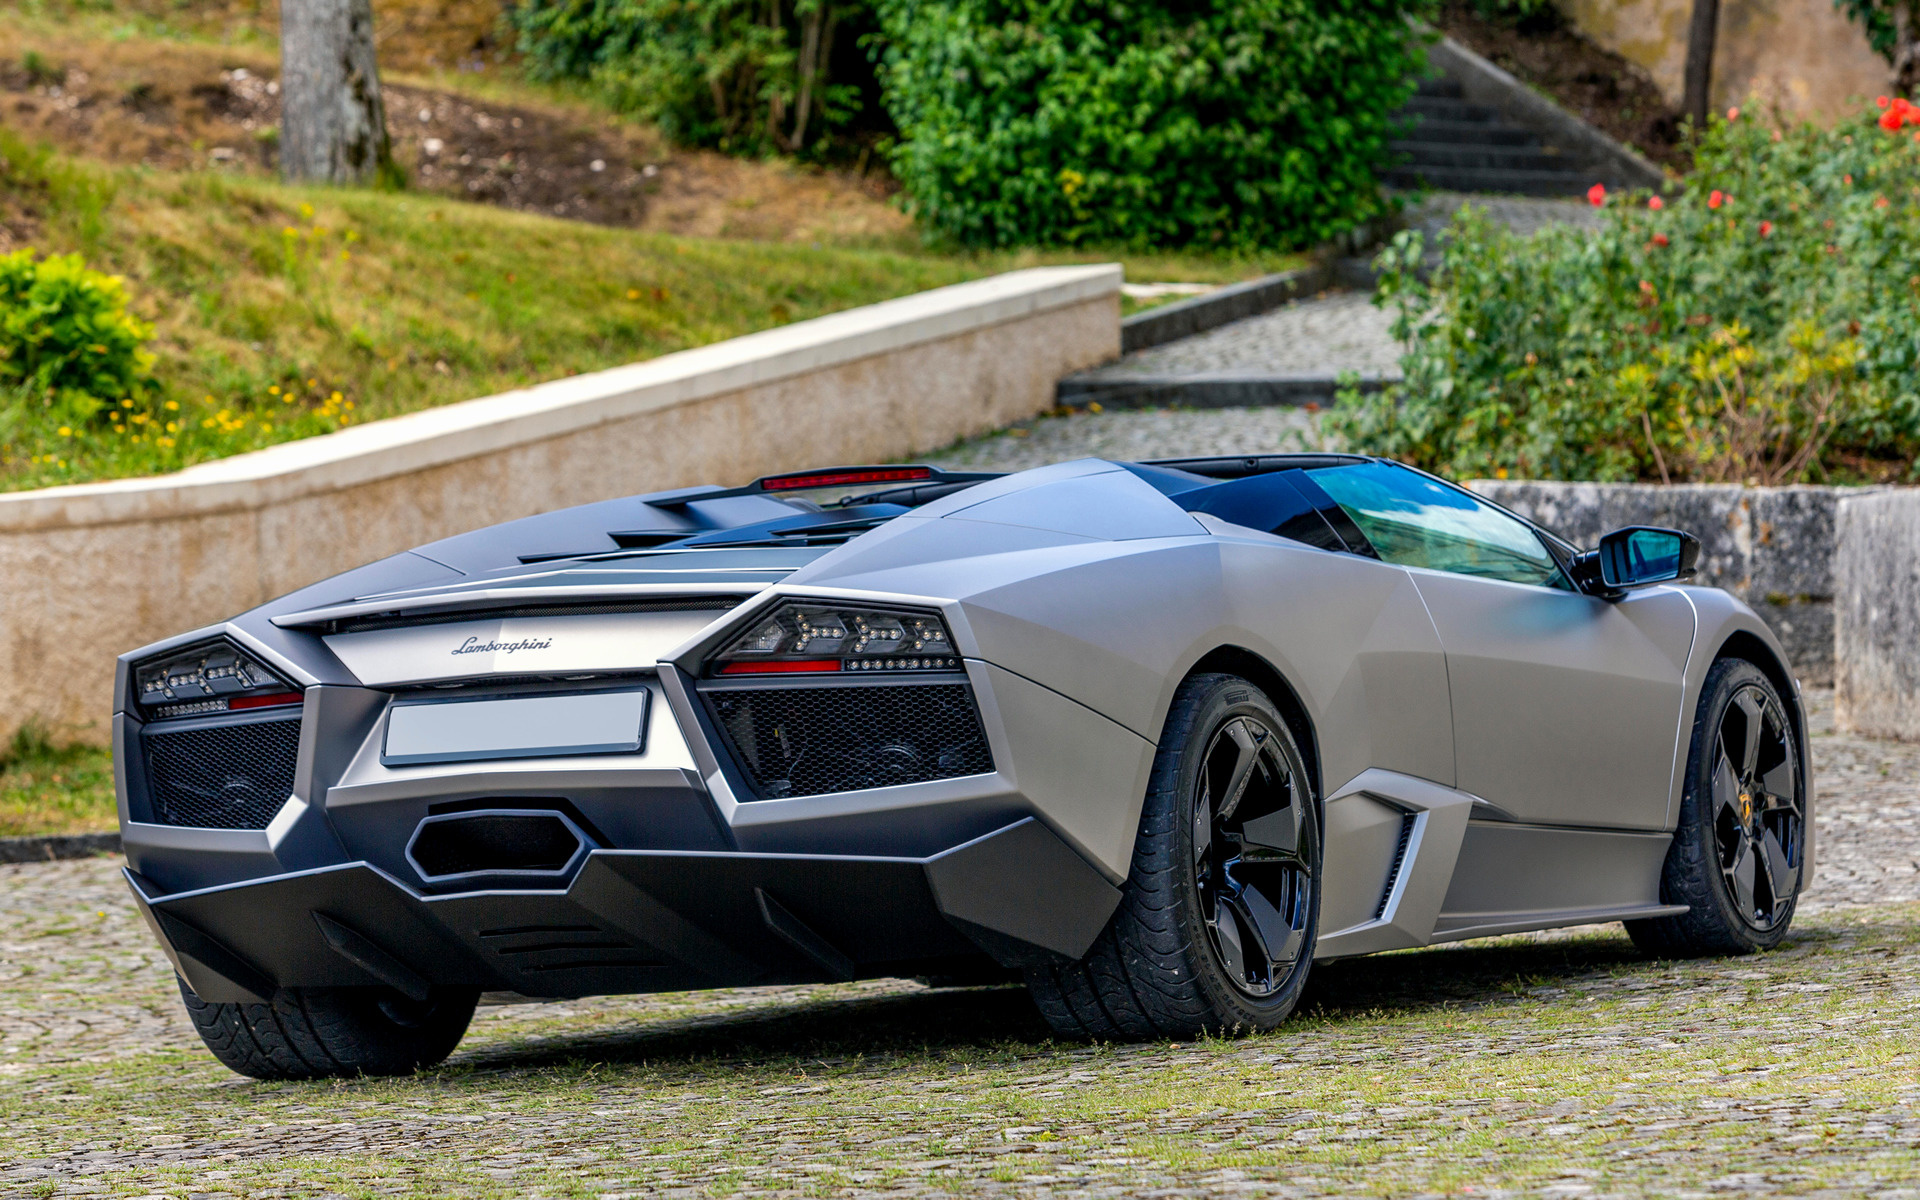 Lamborghini Reventon Roadster and HD Image